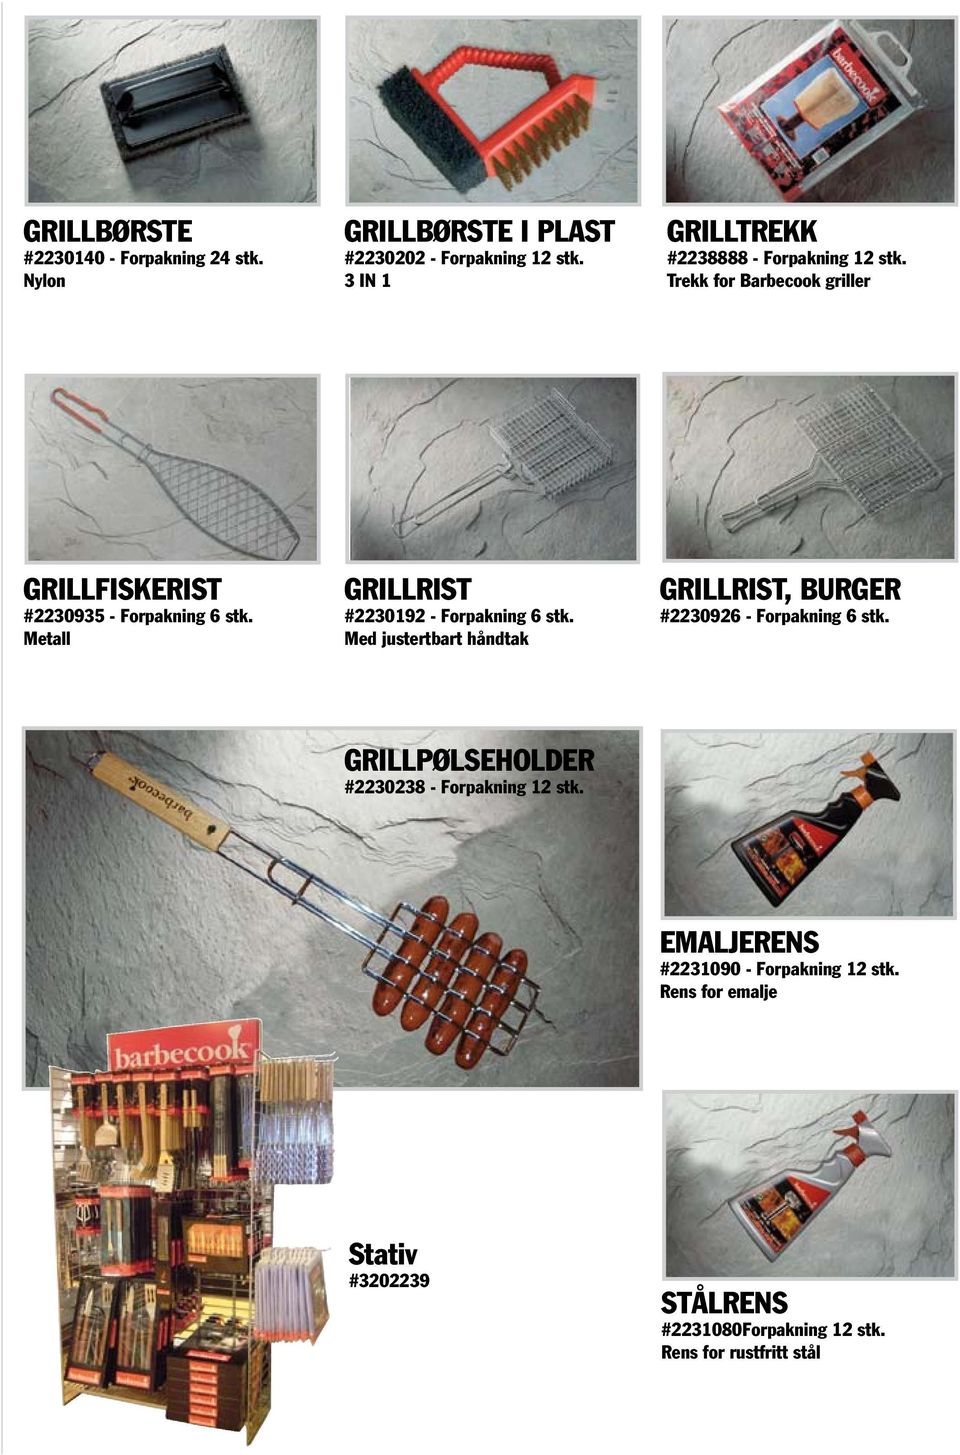 Trekk for Barbecook griller GRILLFISKERIST #2230935 - Metall GRILLRIST #2230192 - Med justertbart håndtak